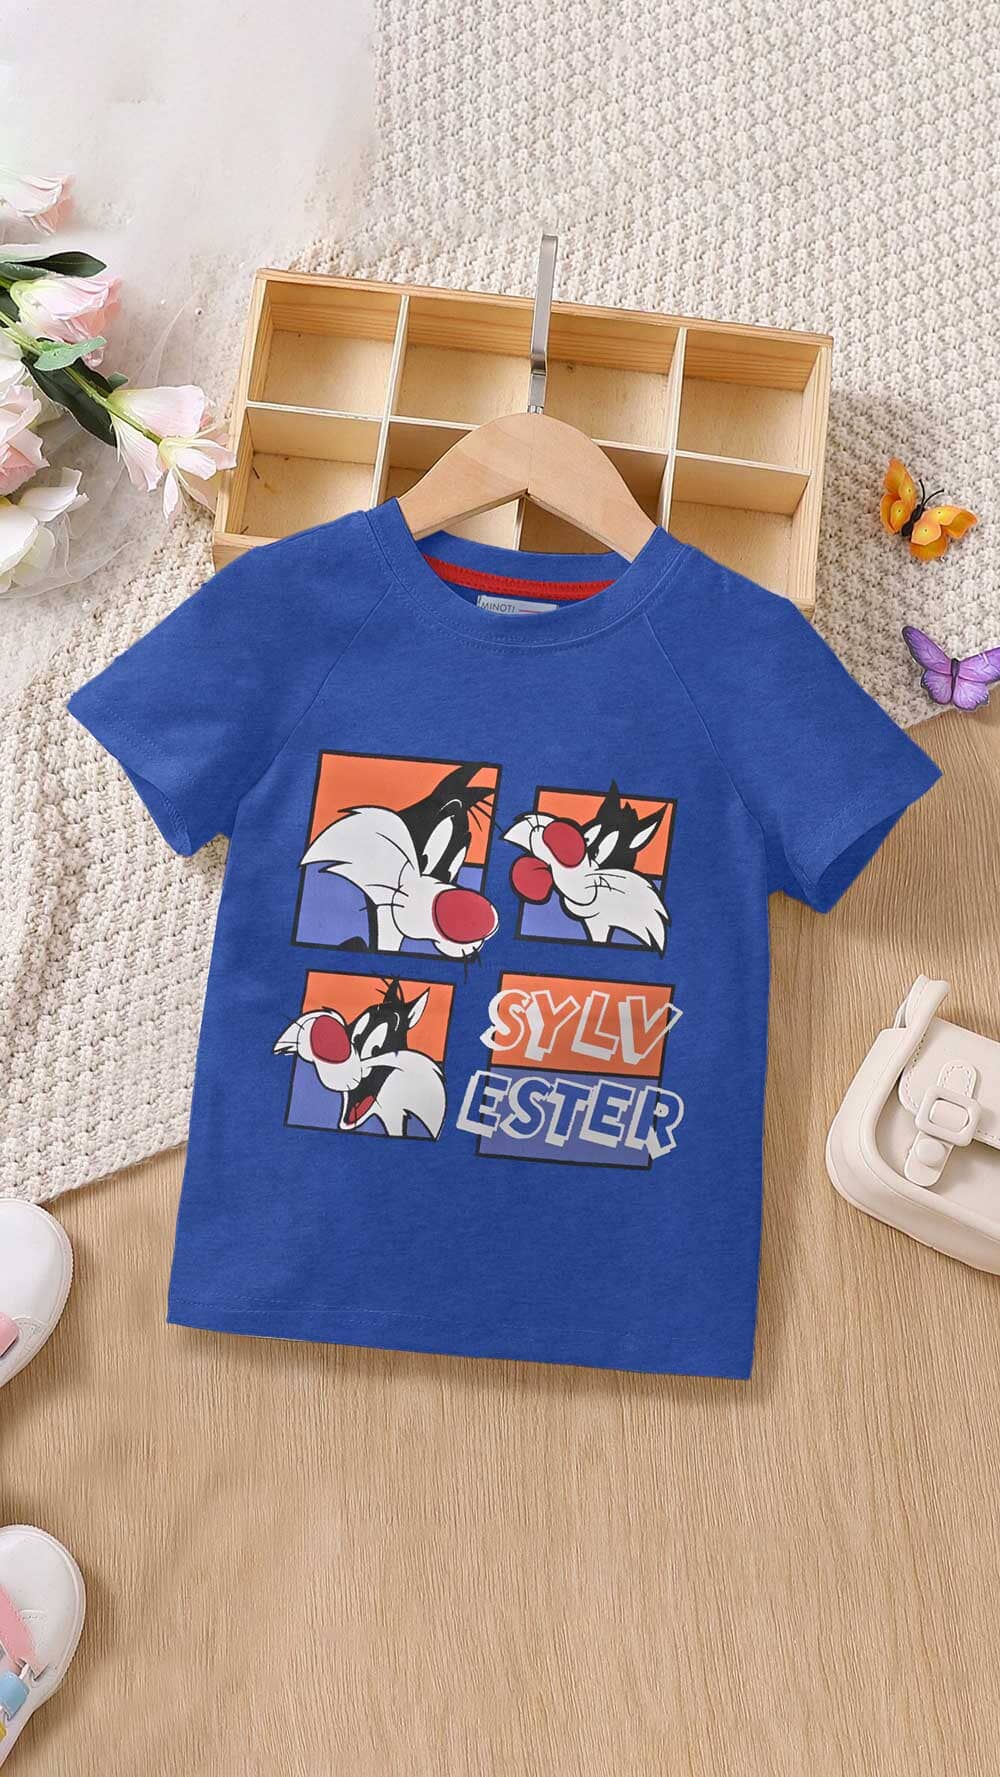 Minoti Kid's Sylv Ester Printed Tee Shirt Boy's Tee Shirt SZK Blue 3-4 Years 